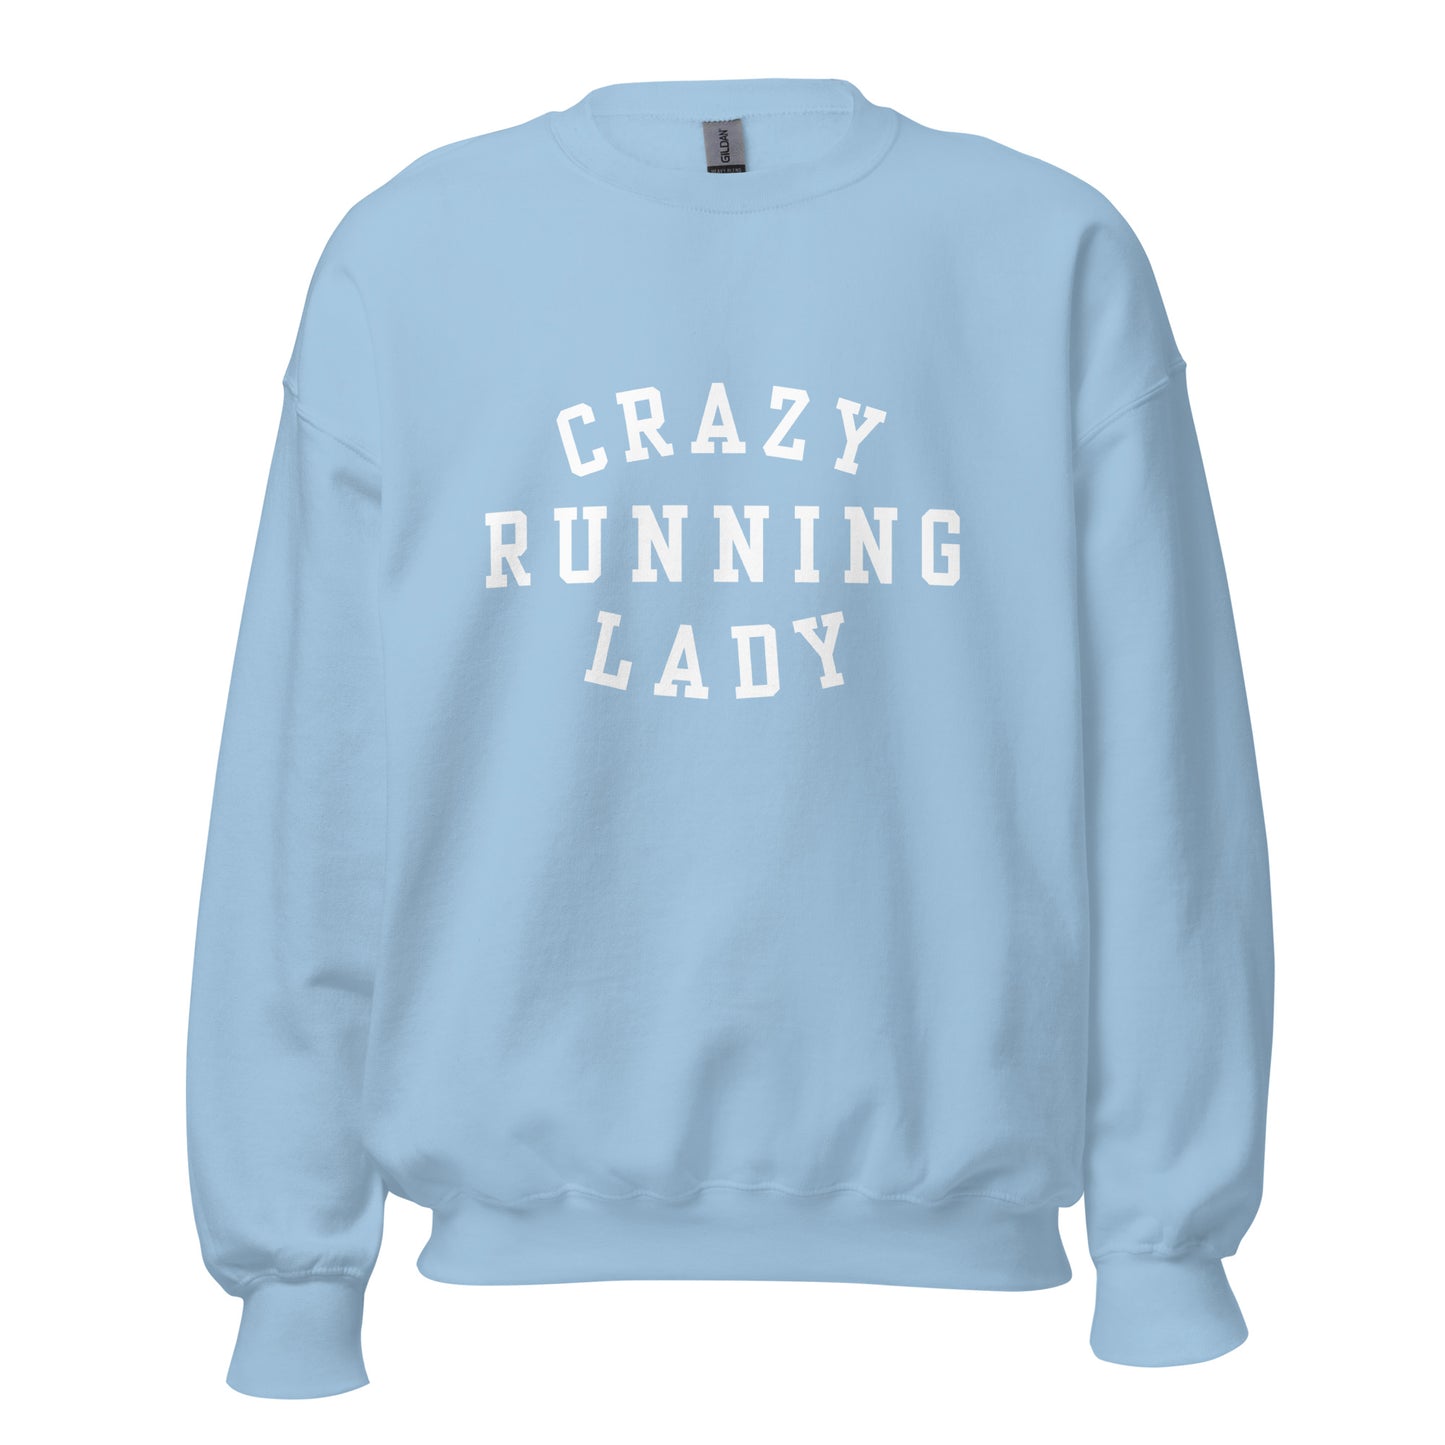 Crazy Running Lady Sweatshirt - White font